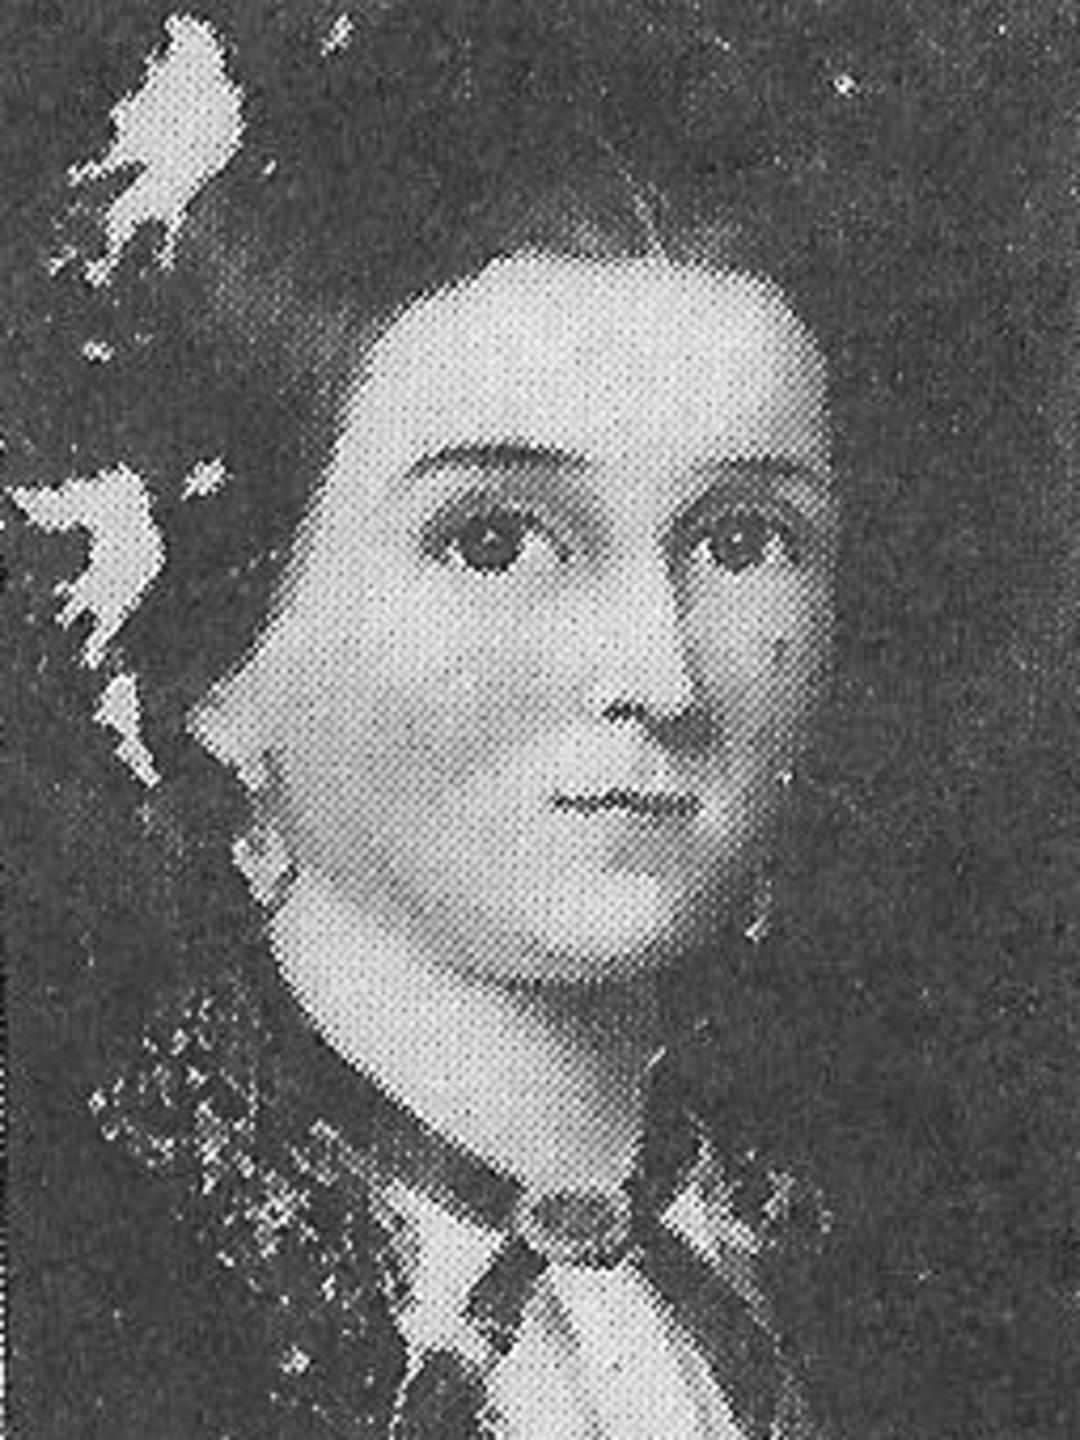 Amelia Woodhouse (1834 - 1861) Profile